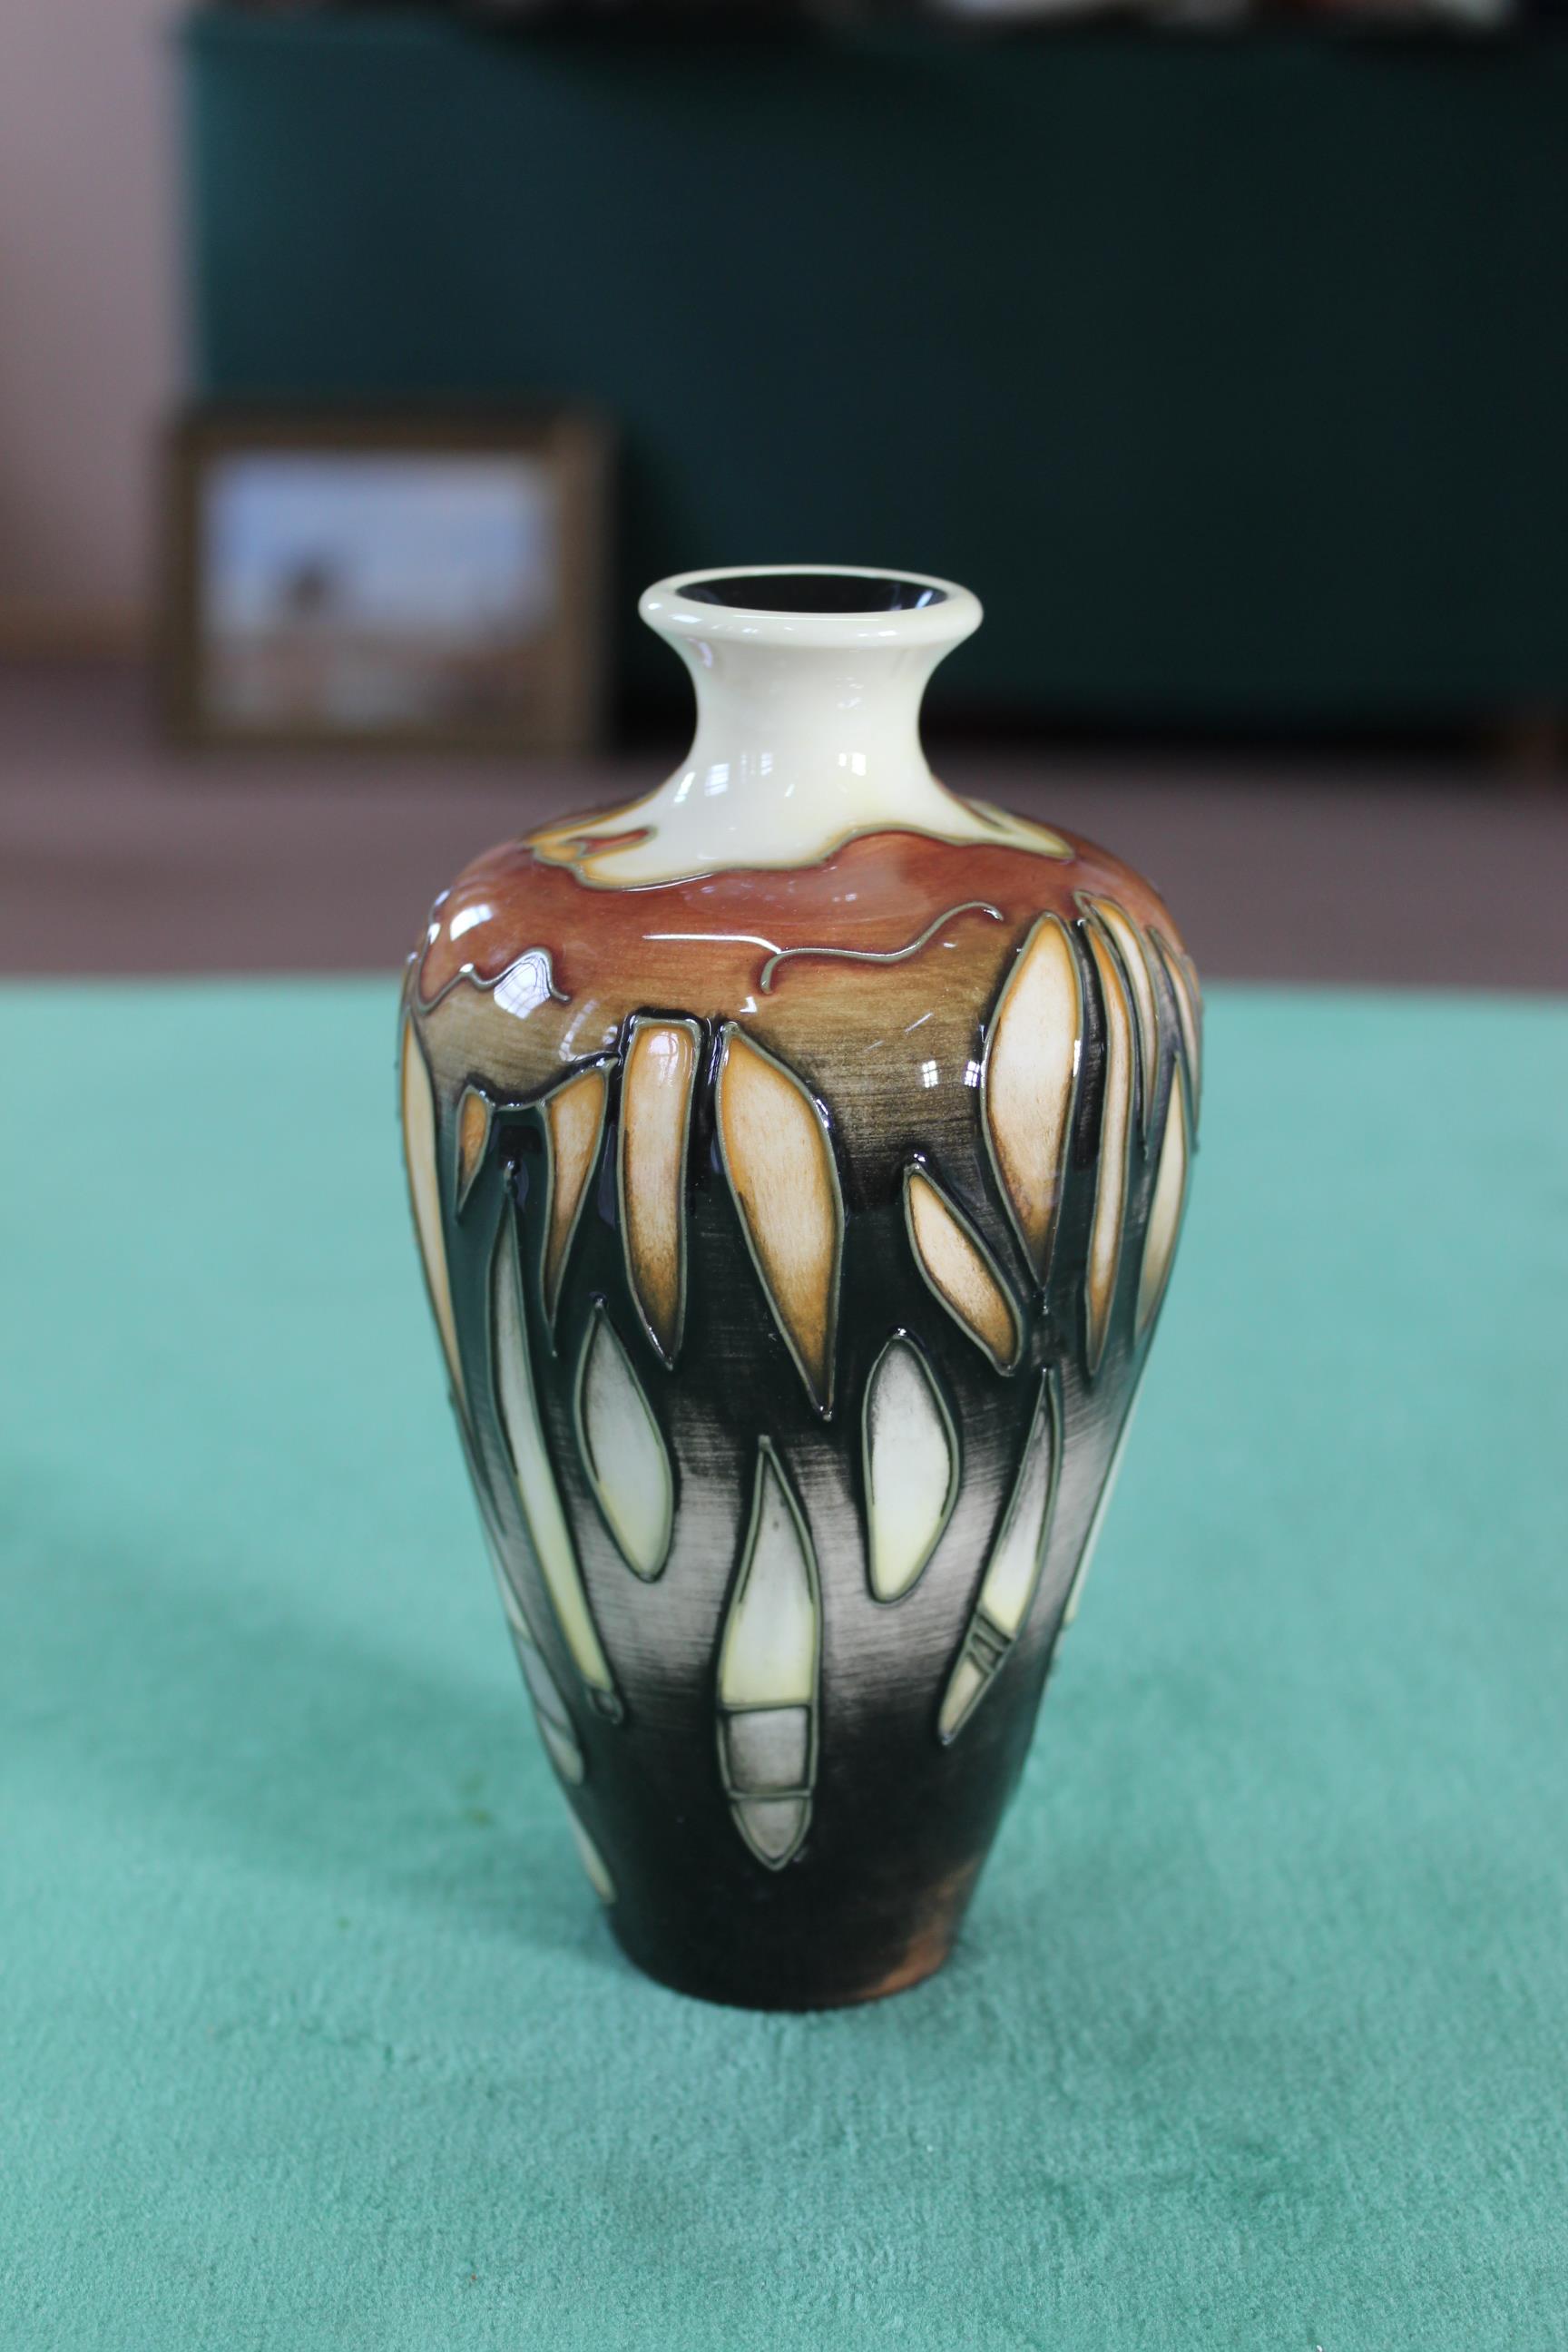 A Moorcroft 'La Garenne' pattern vase, 2005 by Emma Bosson, 6" tall,